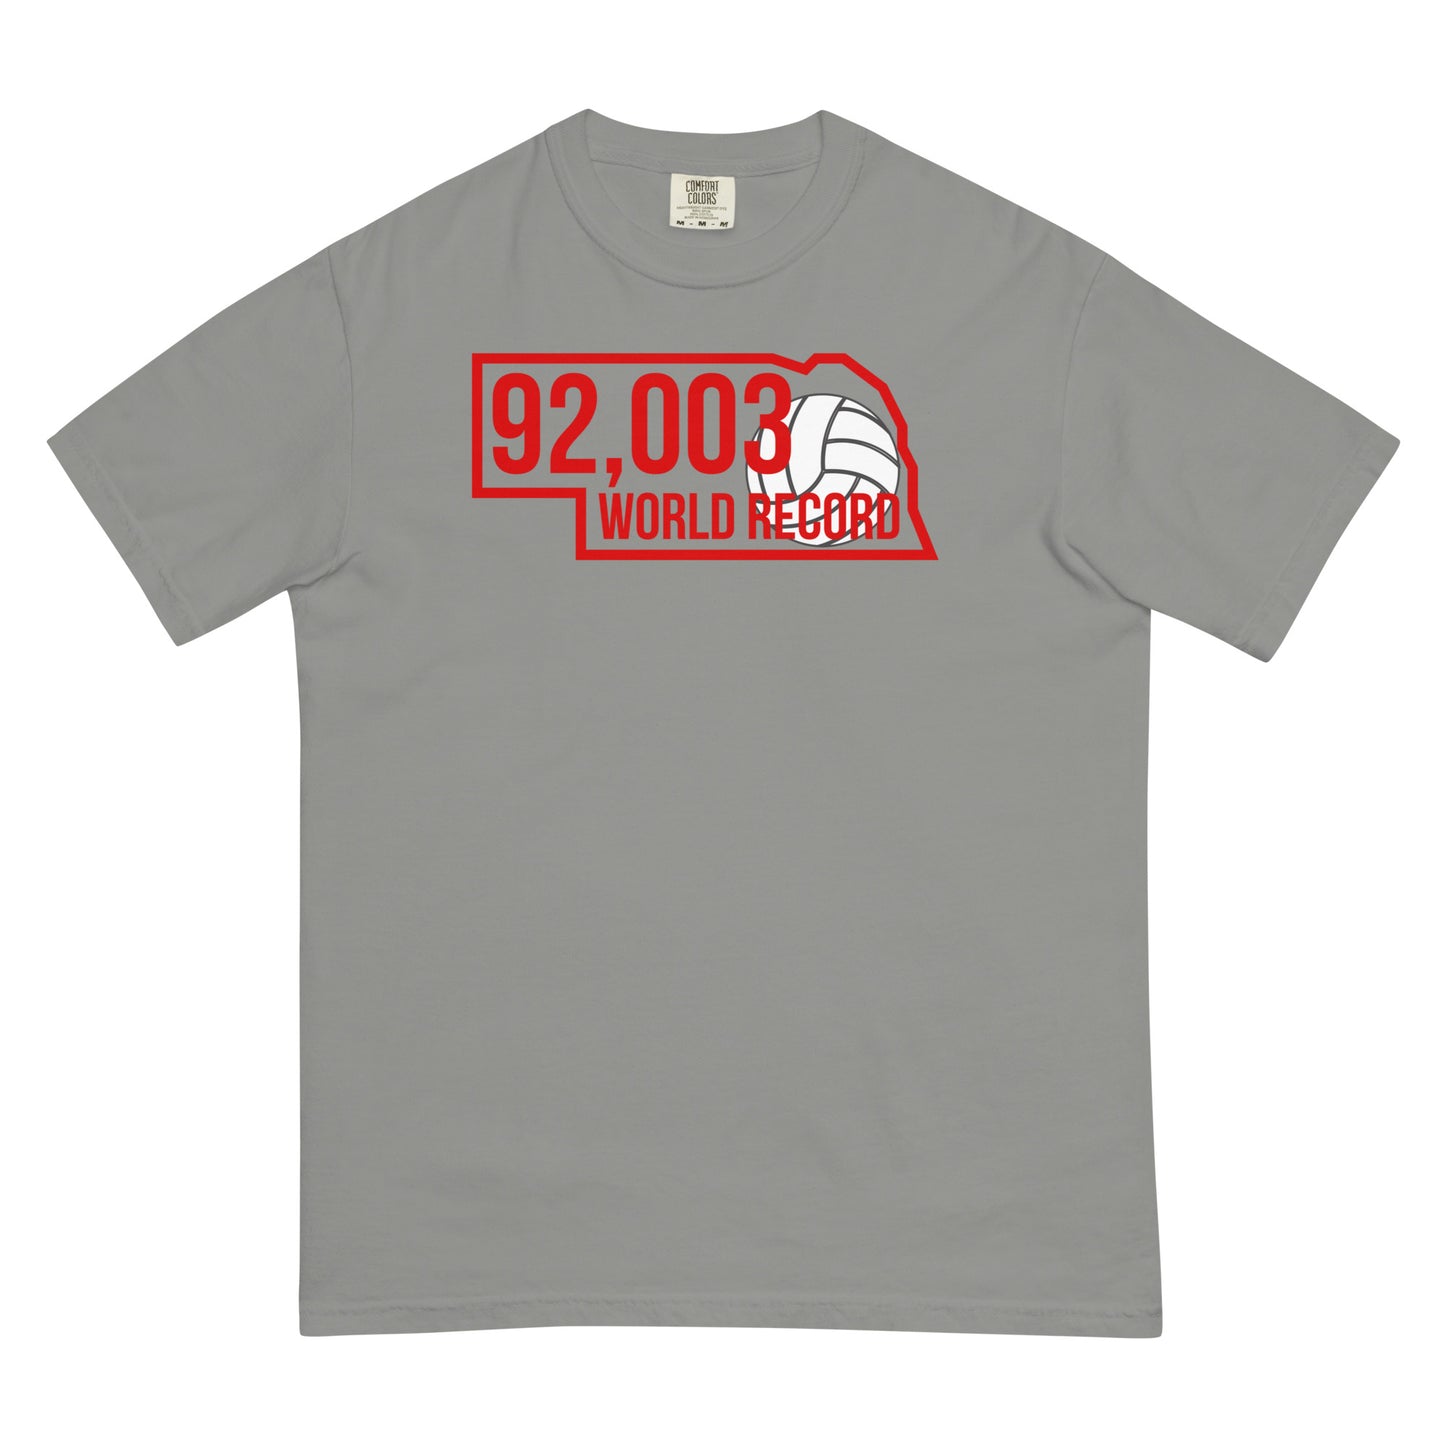 92,003 World Record T-shirt